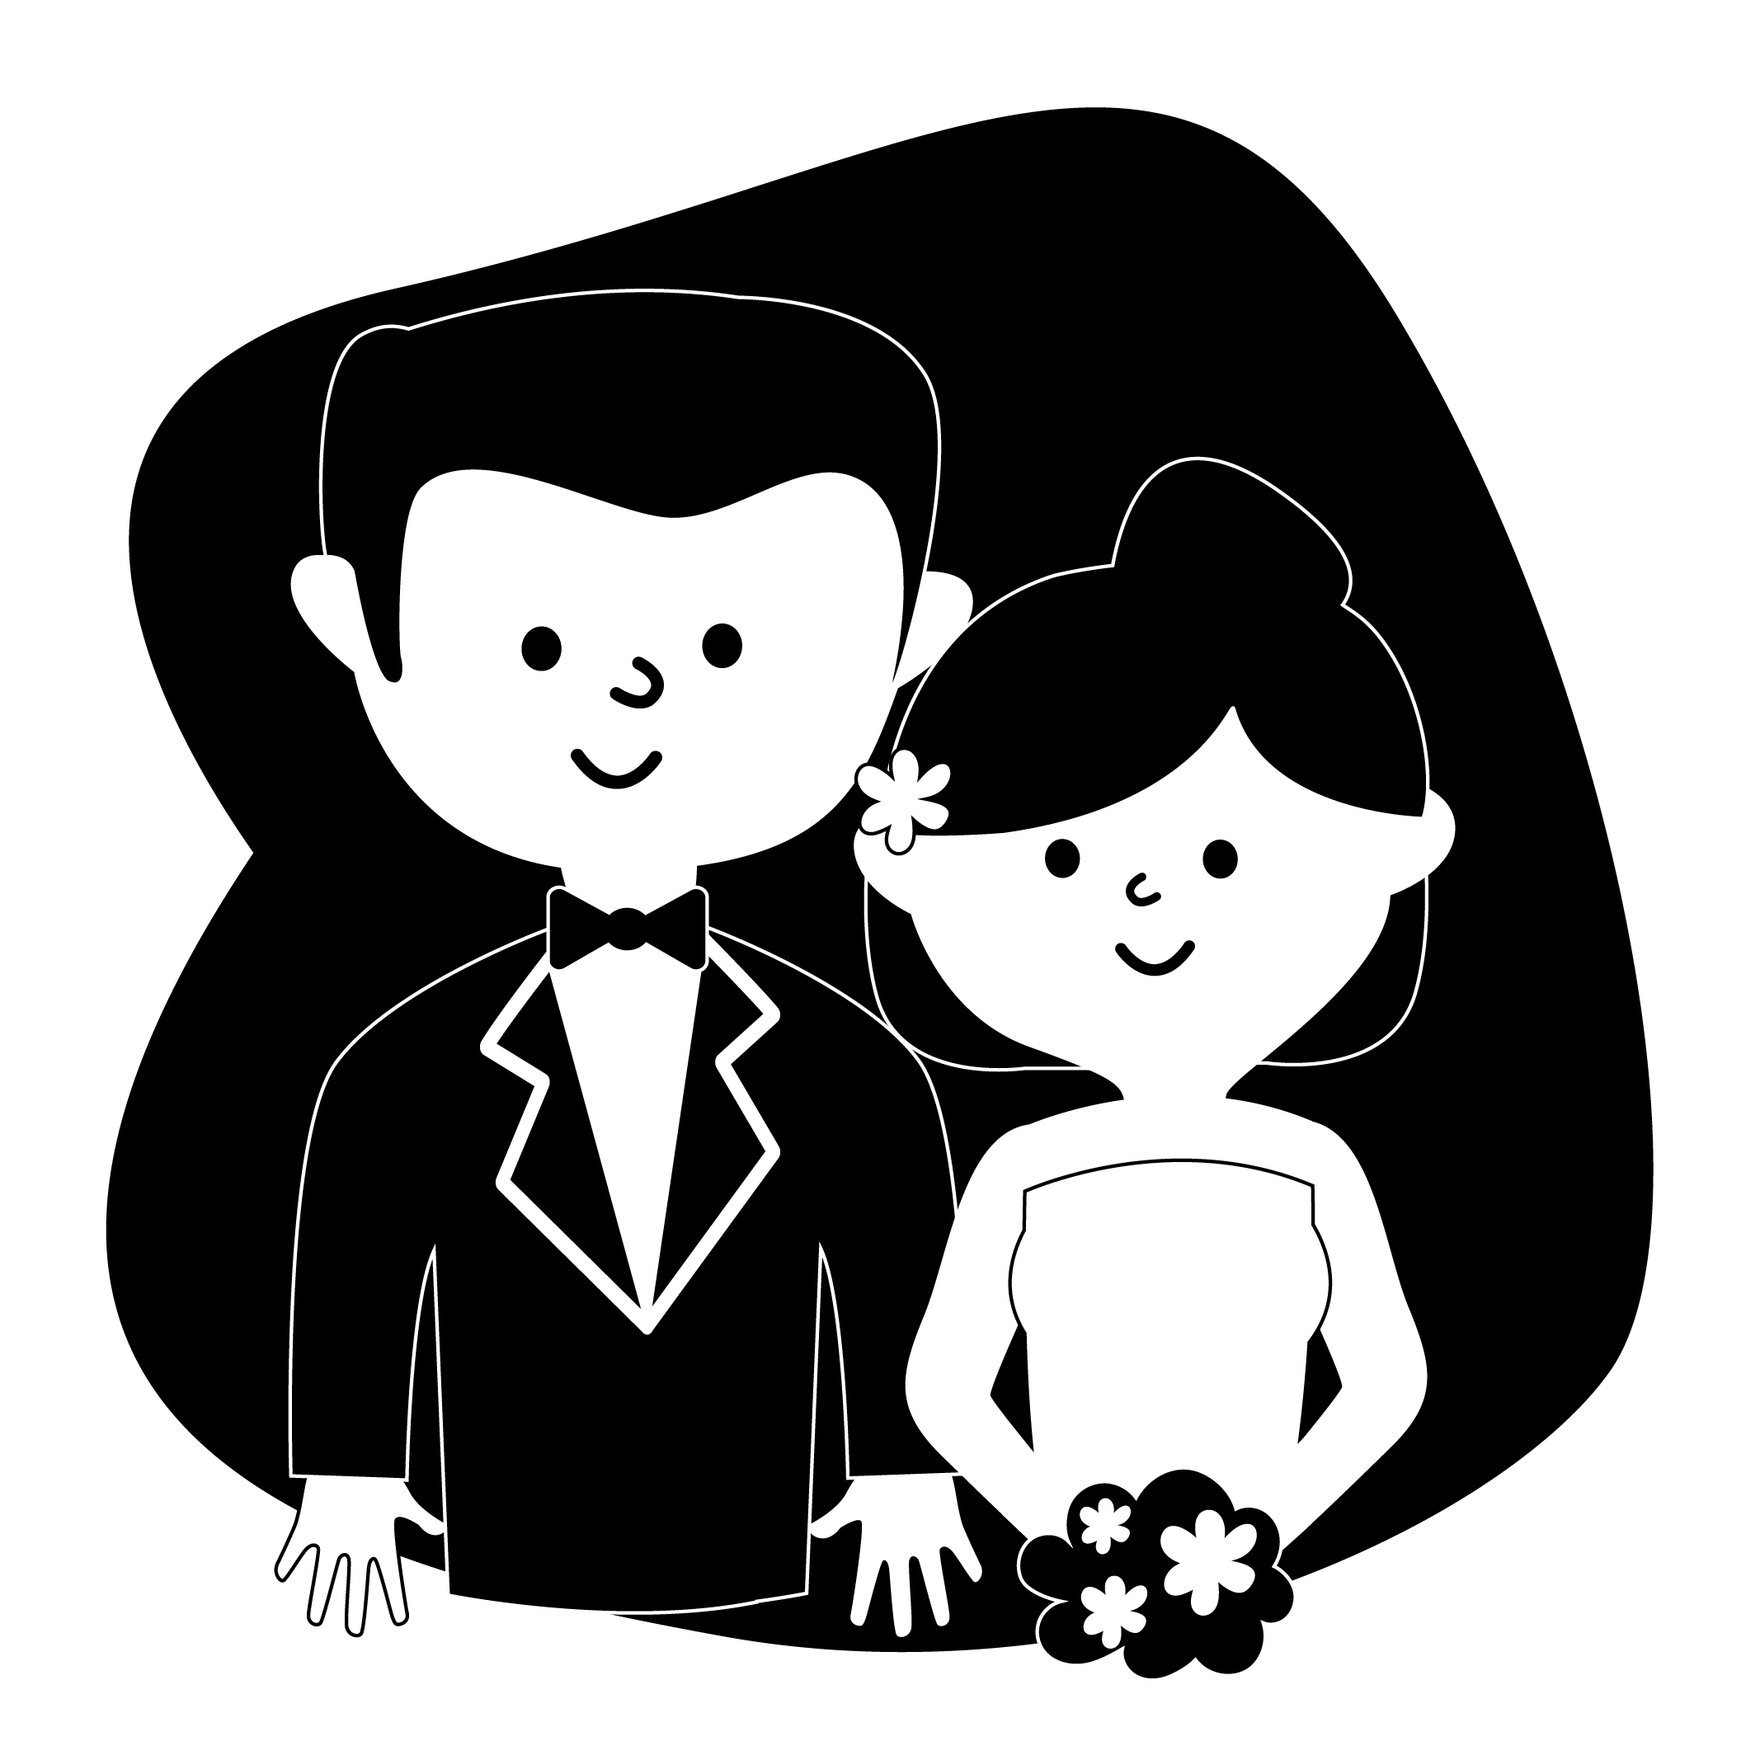 Free Cute Wedding Silhouette in Illustrator, EPS, SVG, JPG, PNG